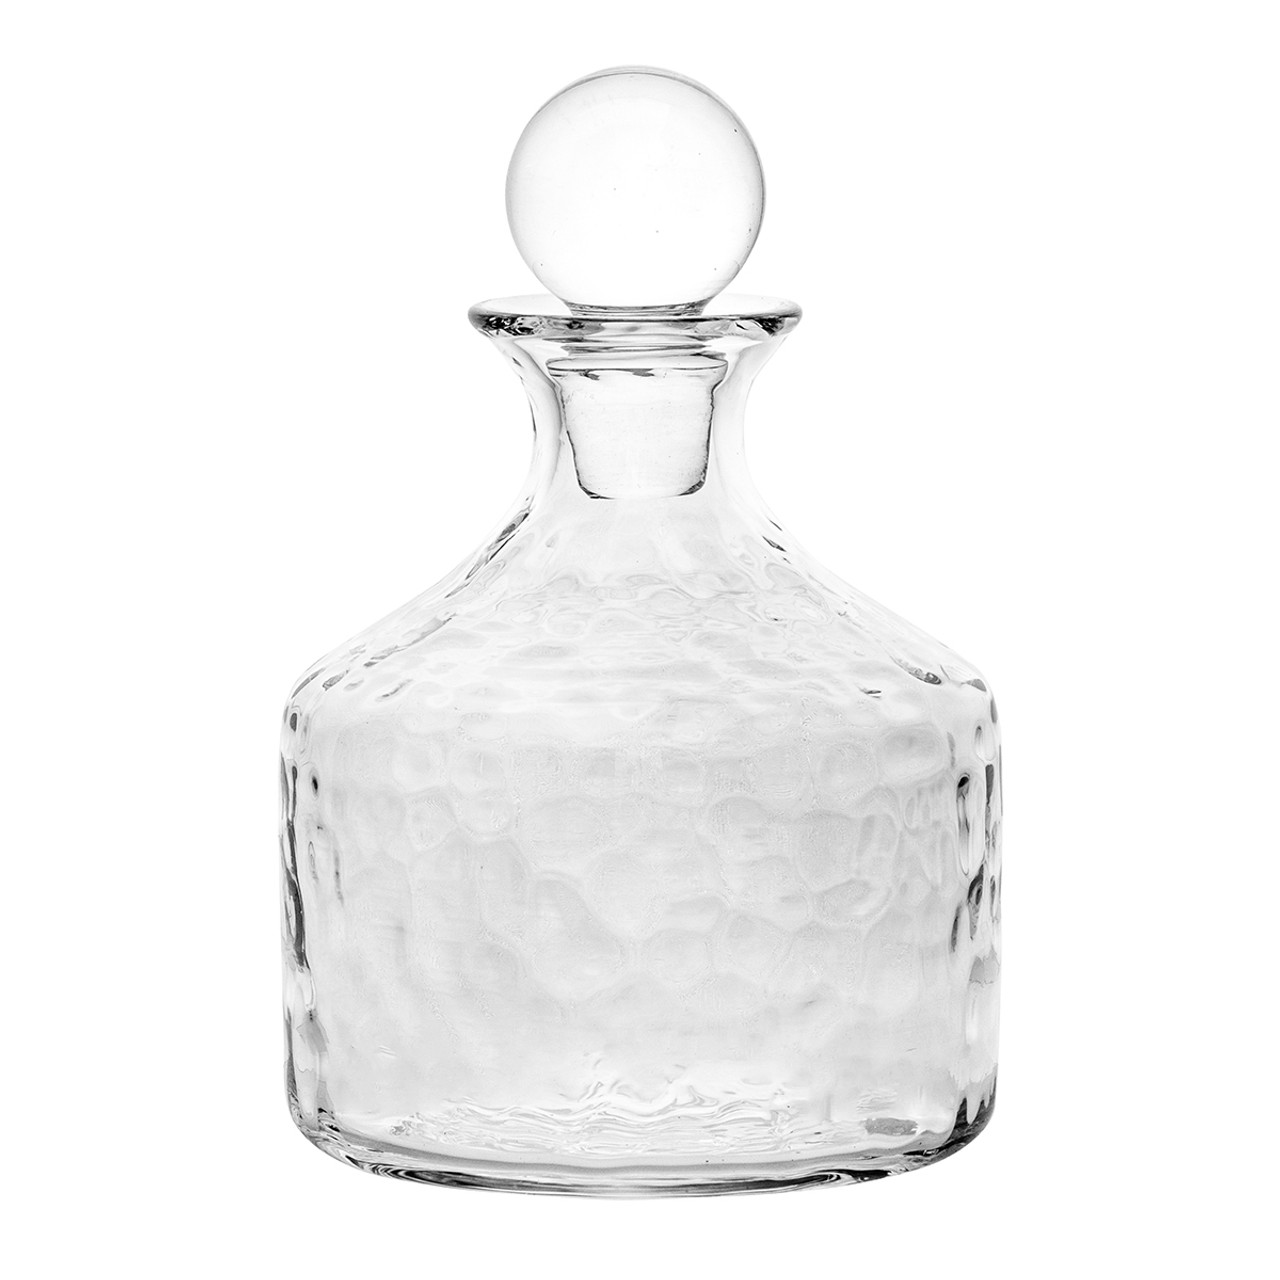 BAR glass decanter - clear